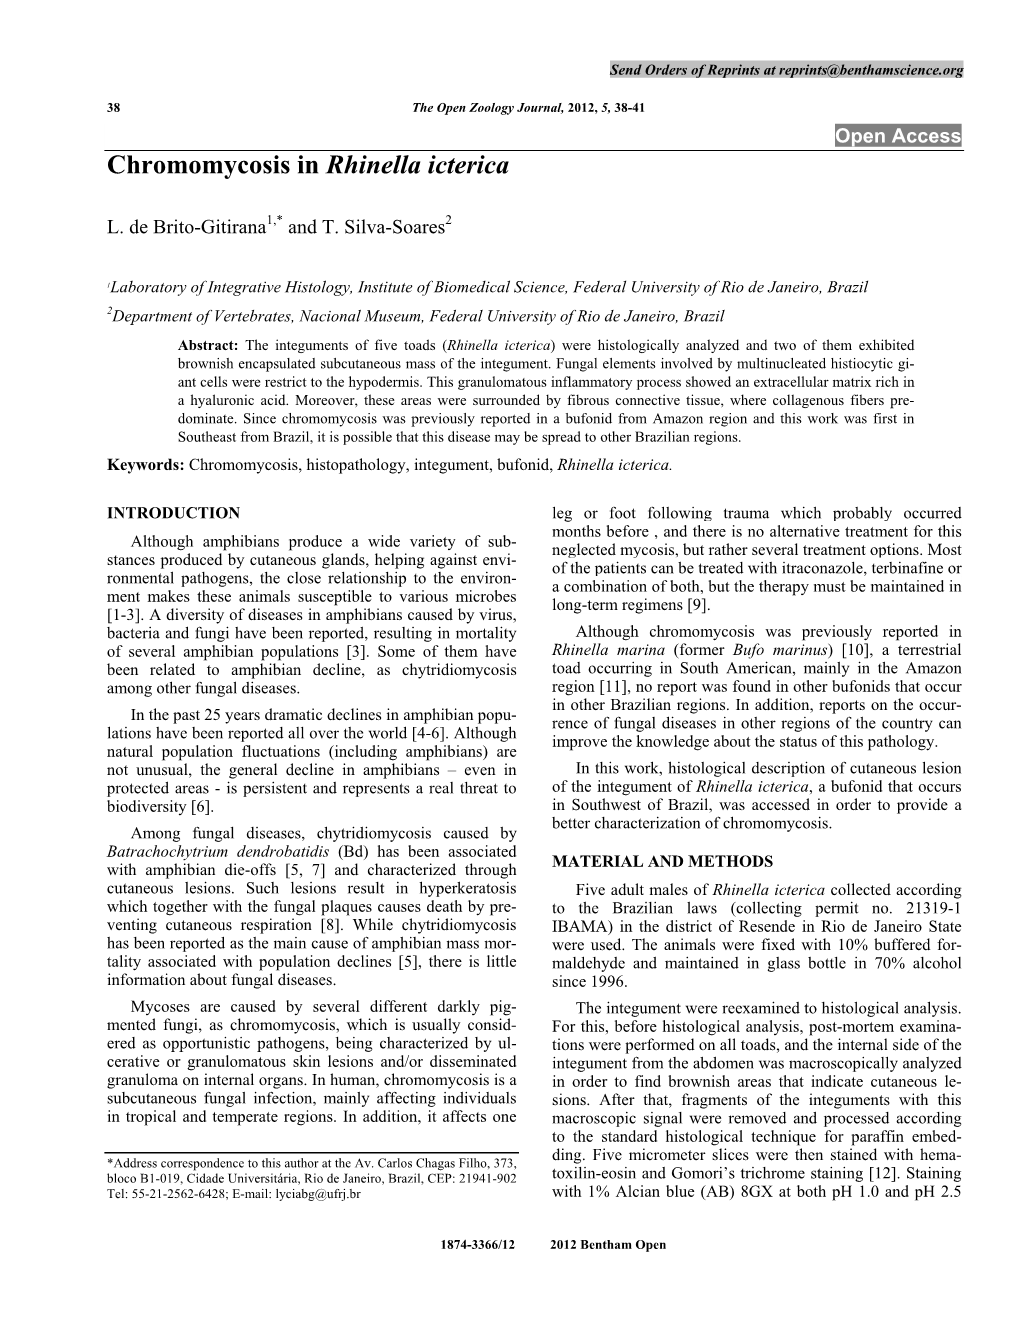 Chromomycosis in Rhinella Icterica